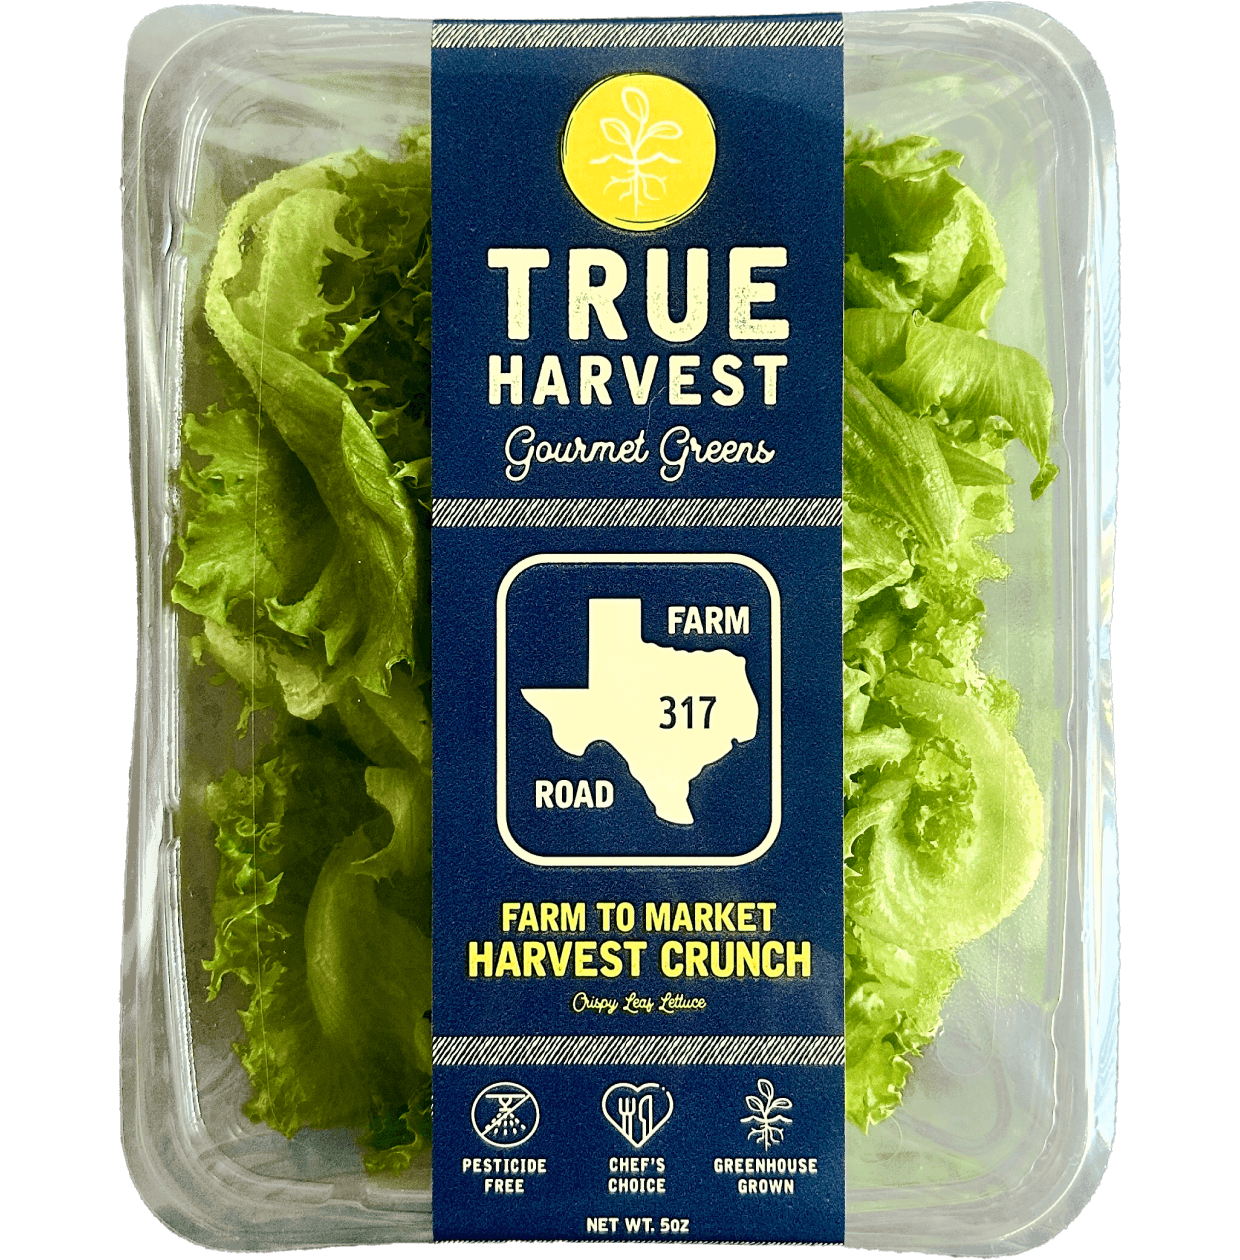 TrueHarvest Farms gourmet greens farm to market Harvest Crunch clamshell packaging